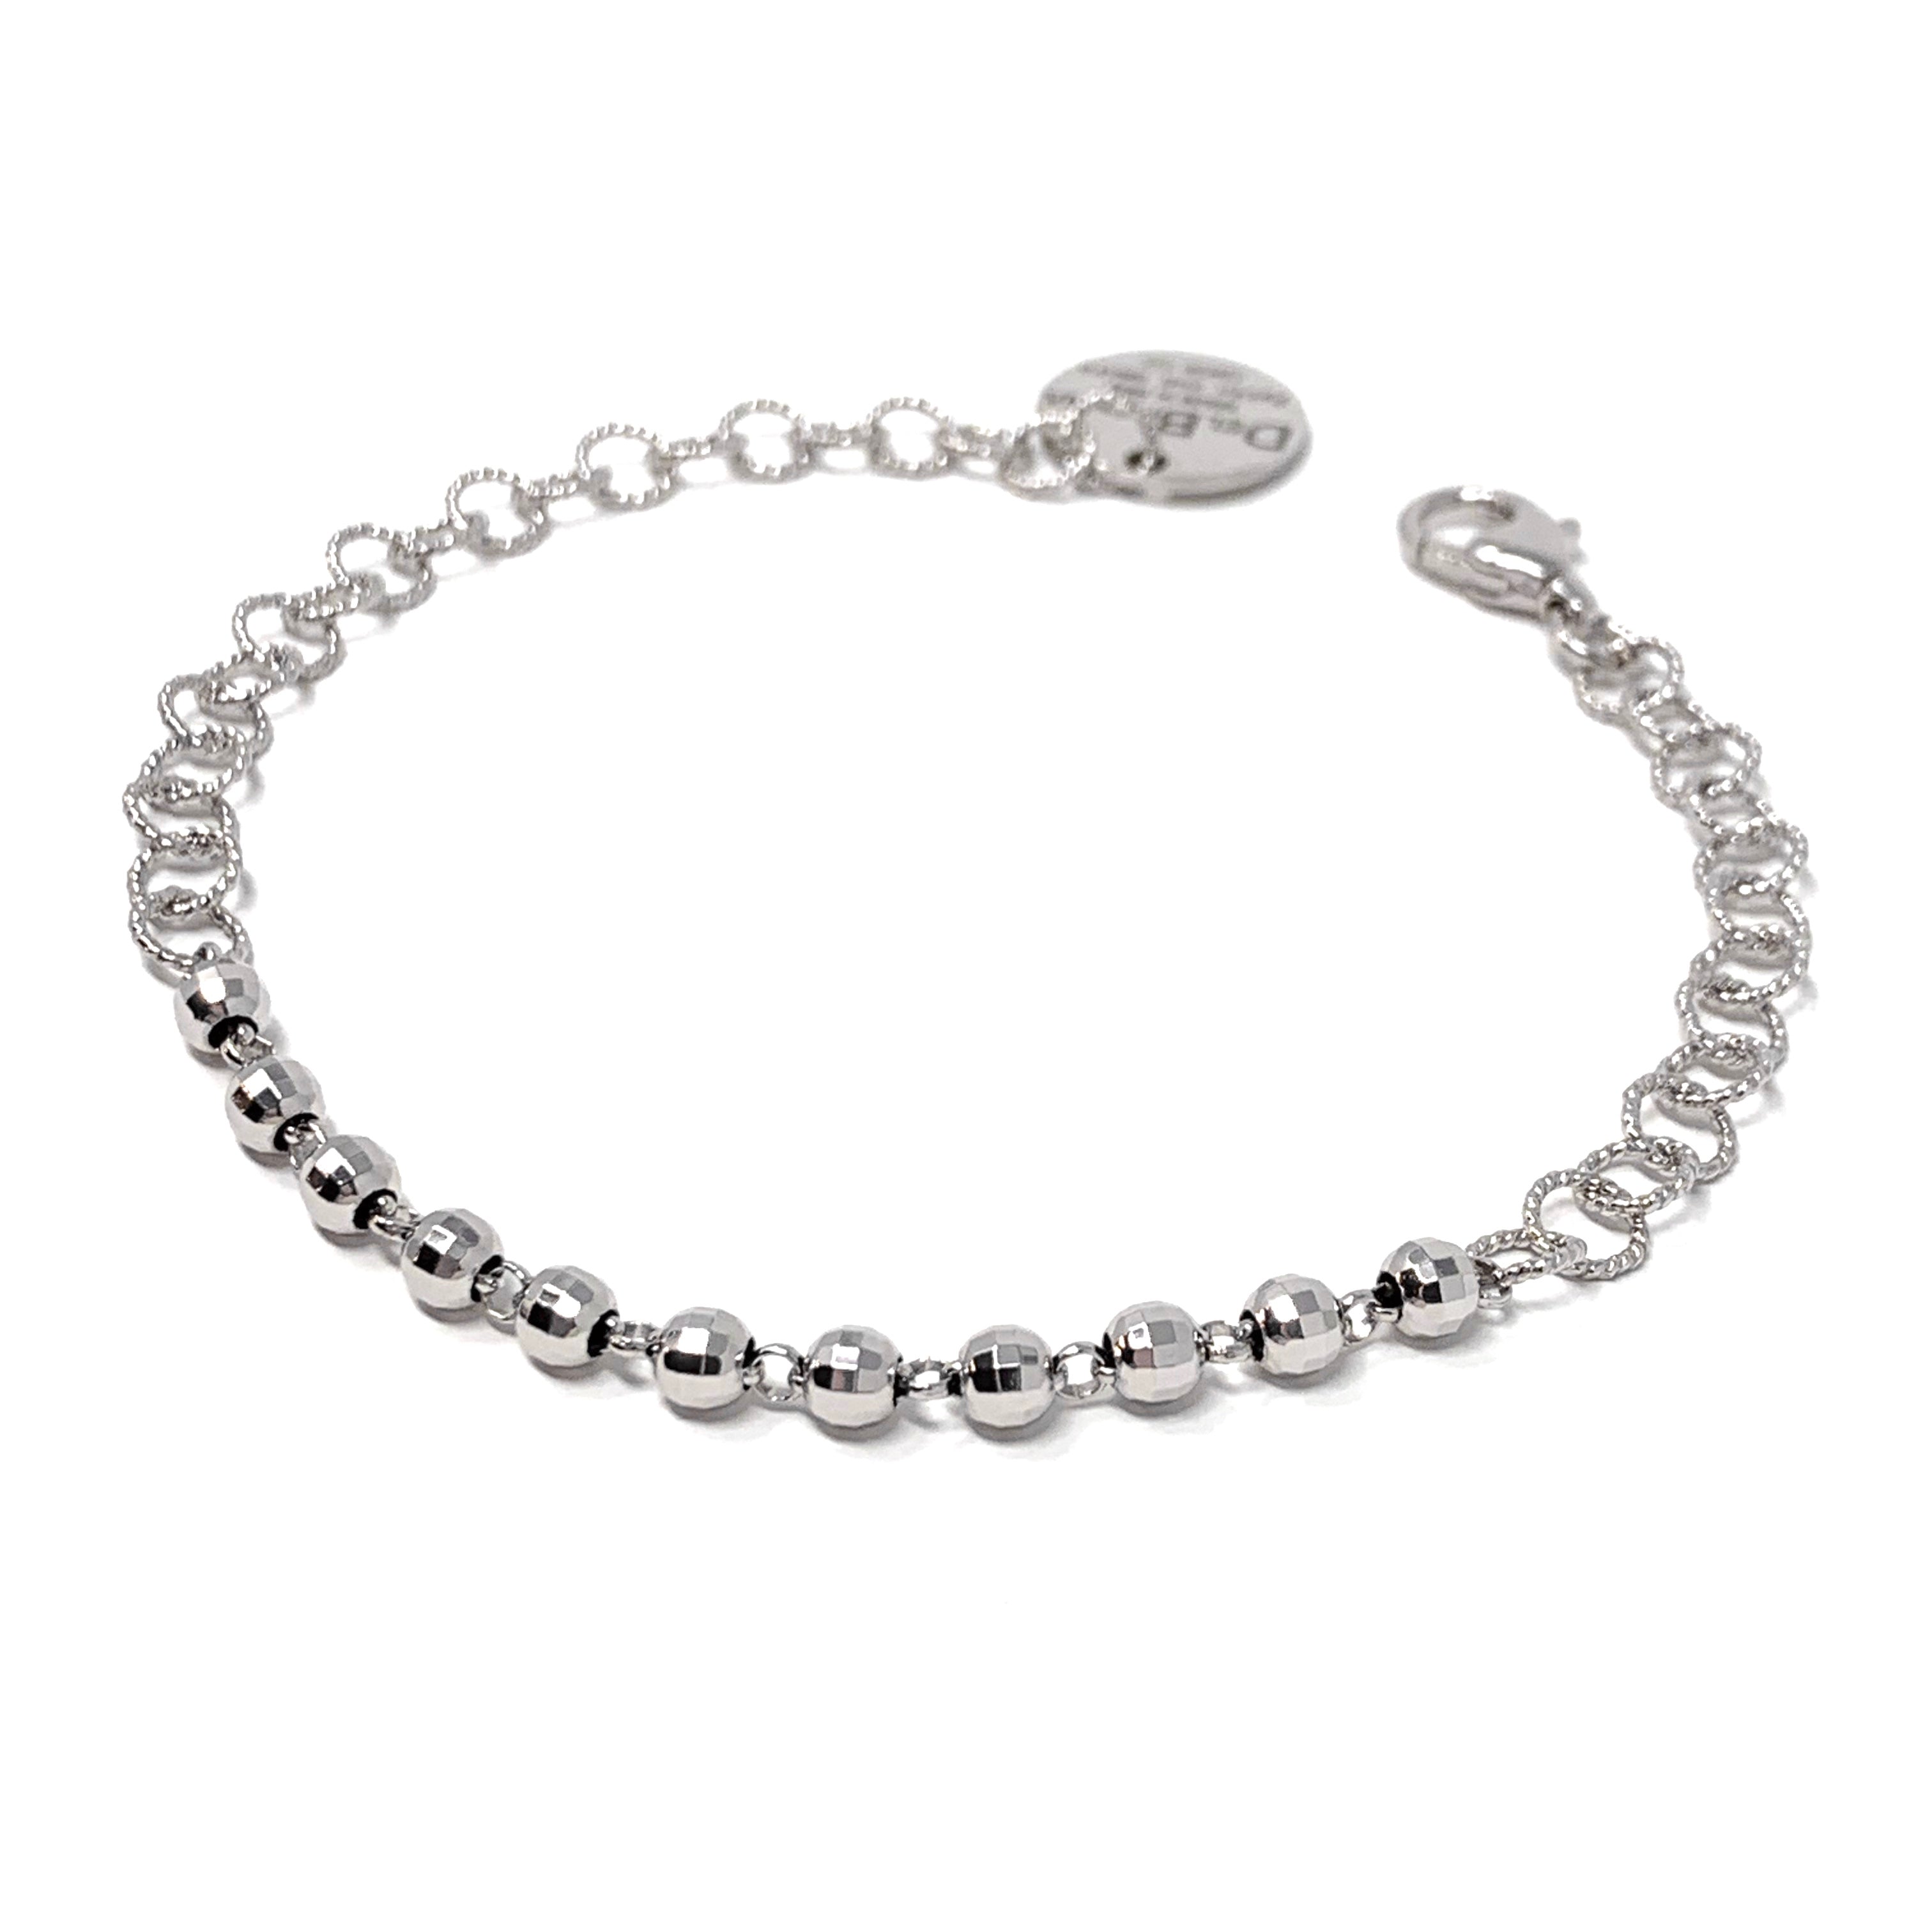 Wispy 5mm Bracelet in Silver with Diamond Beads